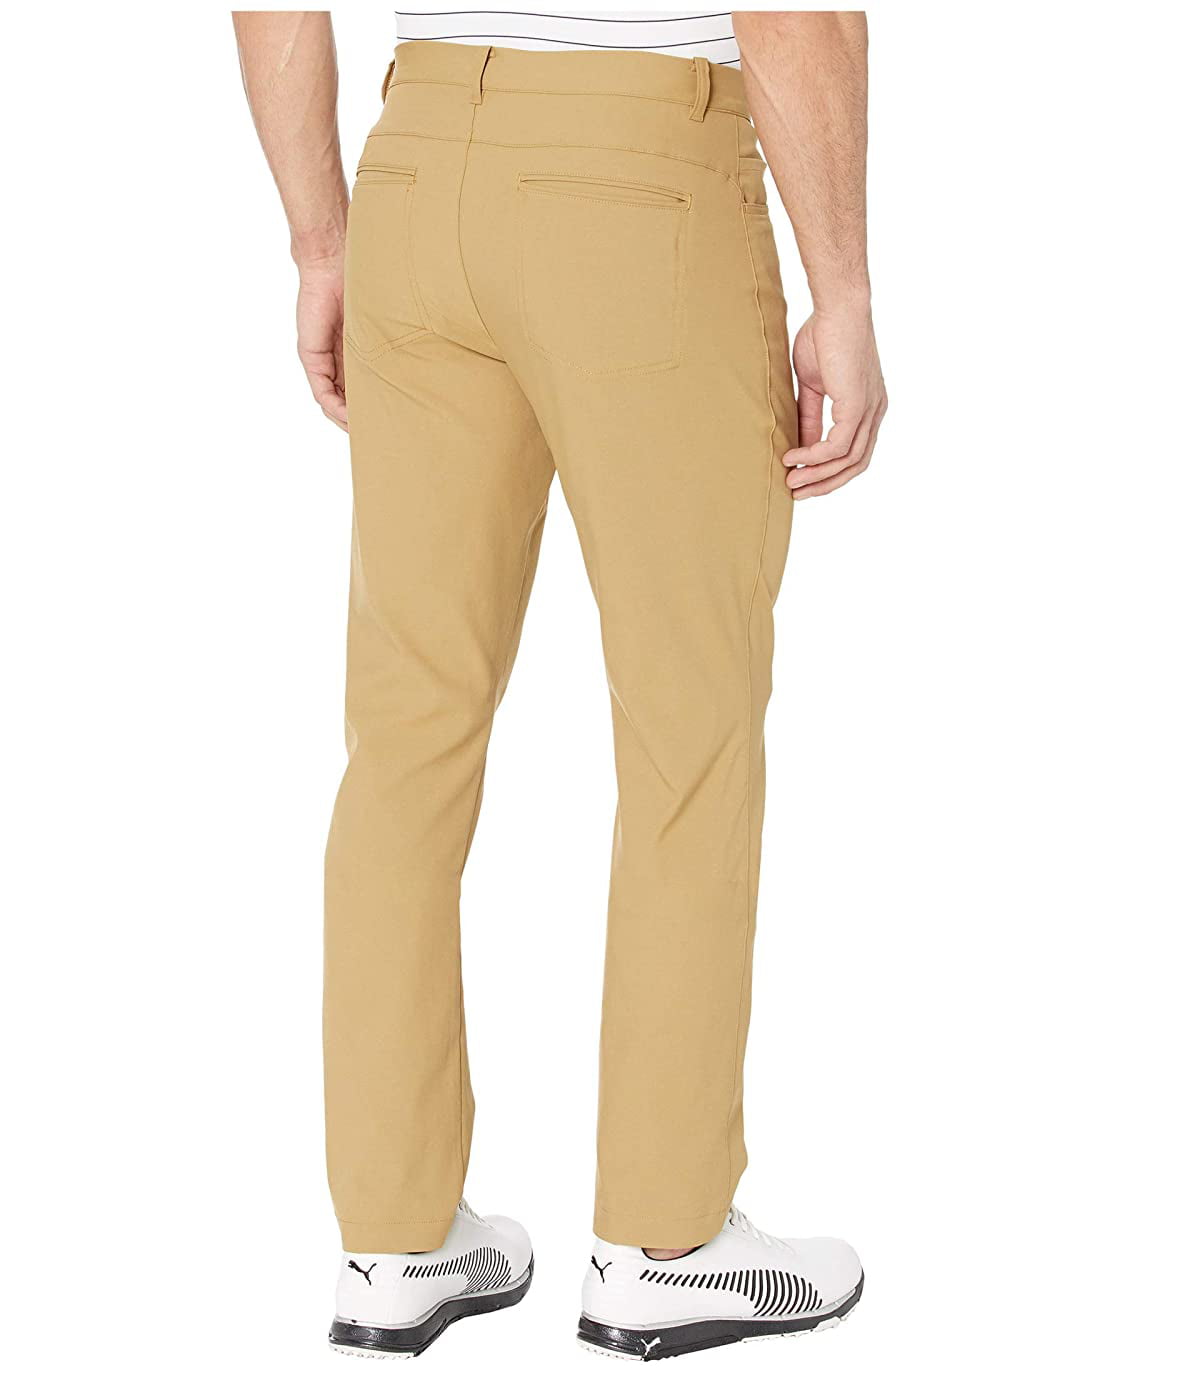 Puma Tailored Jackpot 2.0 Golf Pants - Navy - TheSportStore.pk